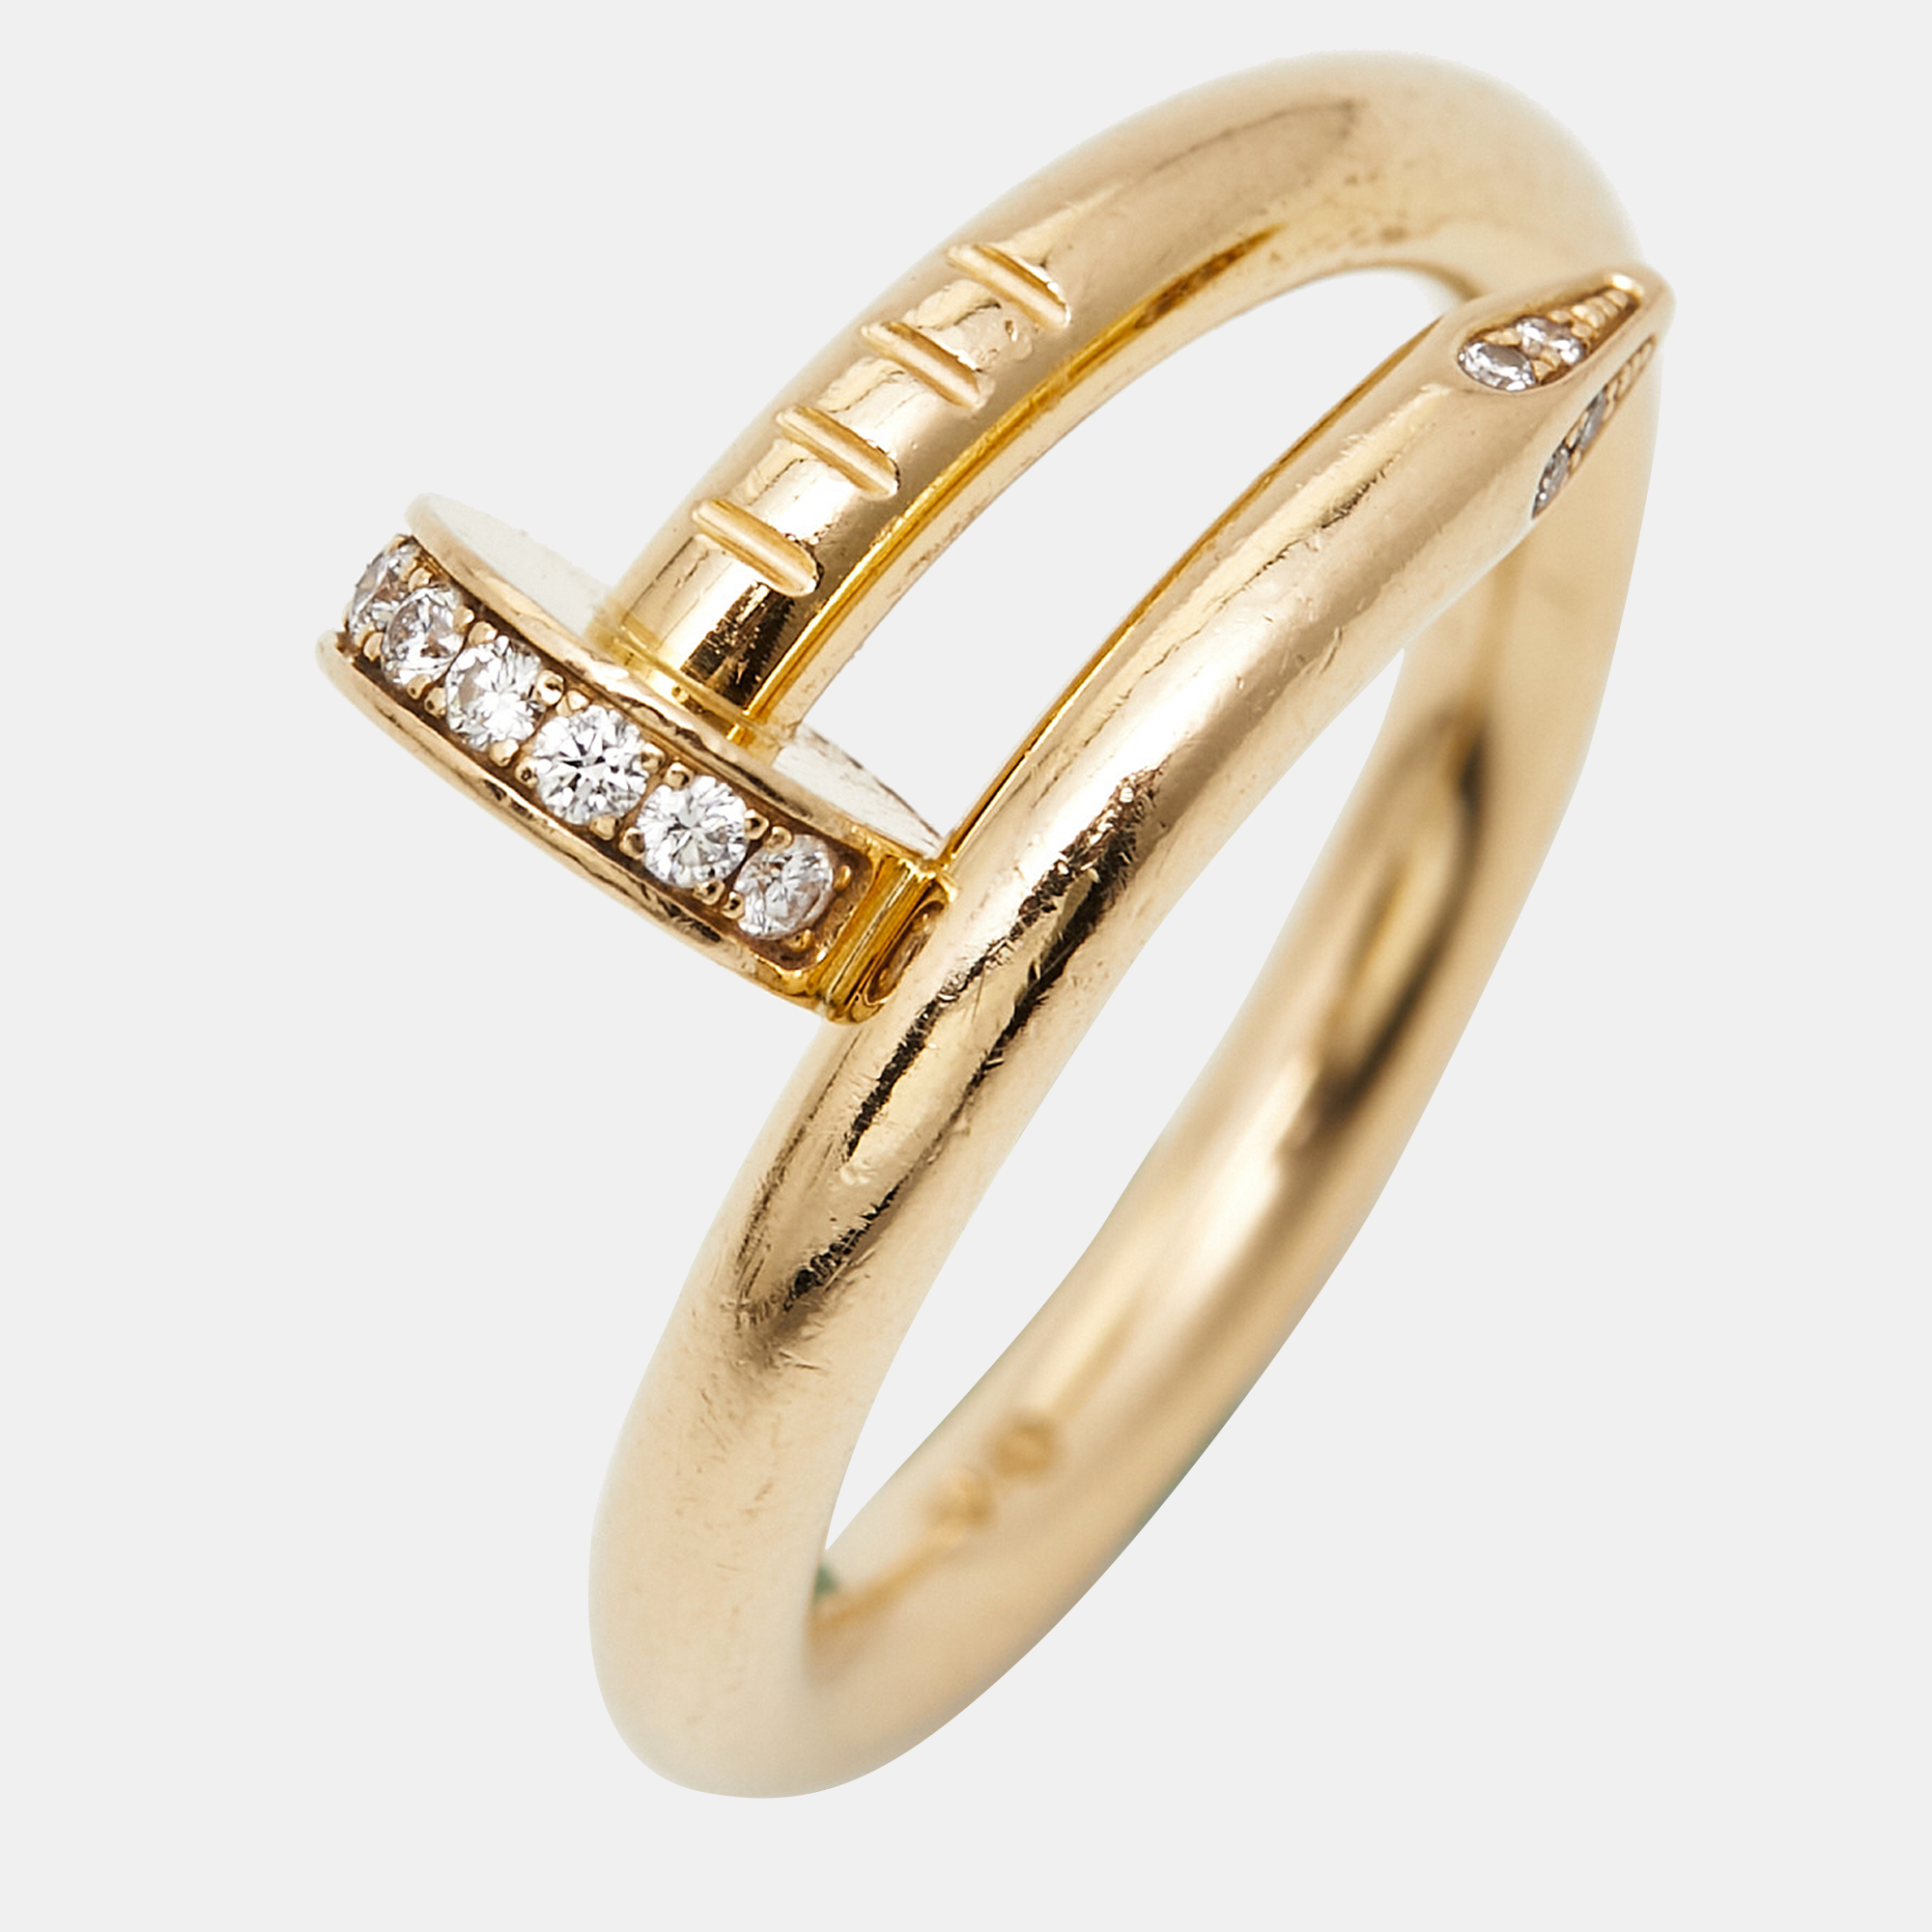 Cartier Juste Un Clou Diamond 18k Yellow Gold Ring Size 51